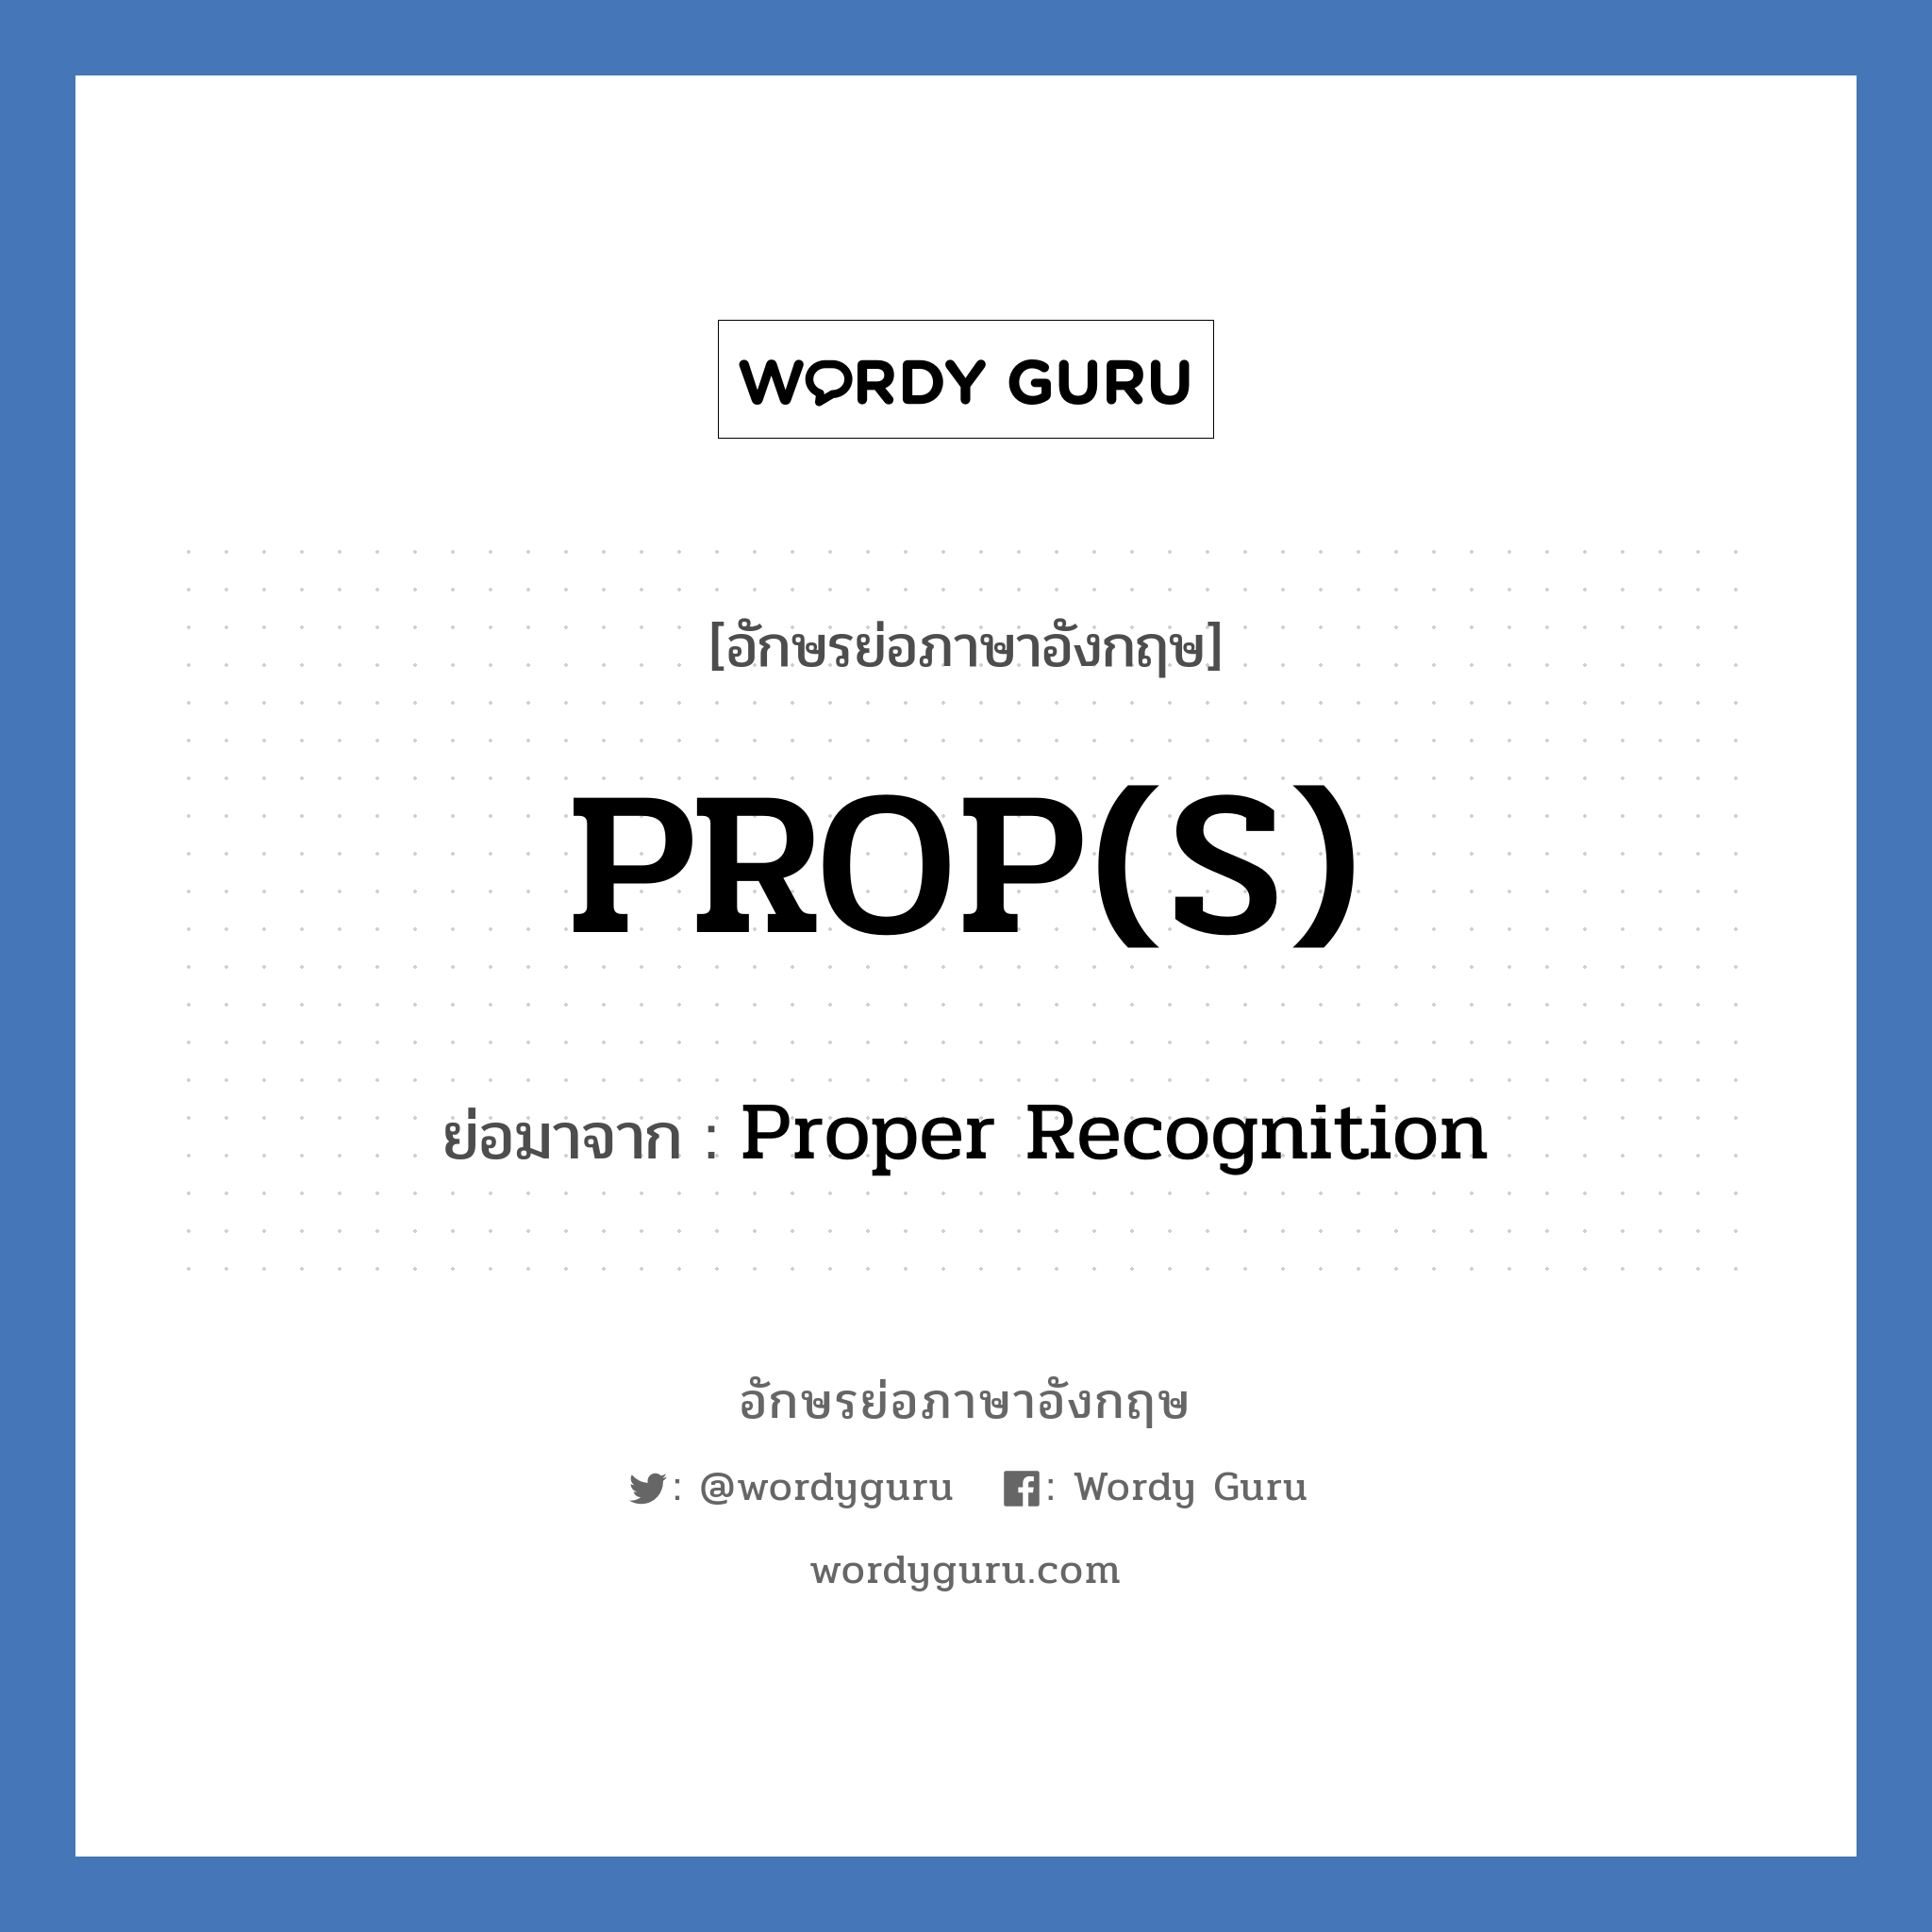 Proper Recognition คำย่อคือ? แปลว่า?, อักษรย่อภาษาอังกฤษ Proper Recognition ย่อมาจาก PROP(S)